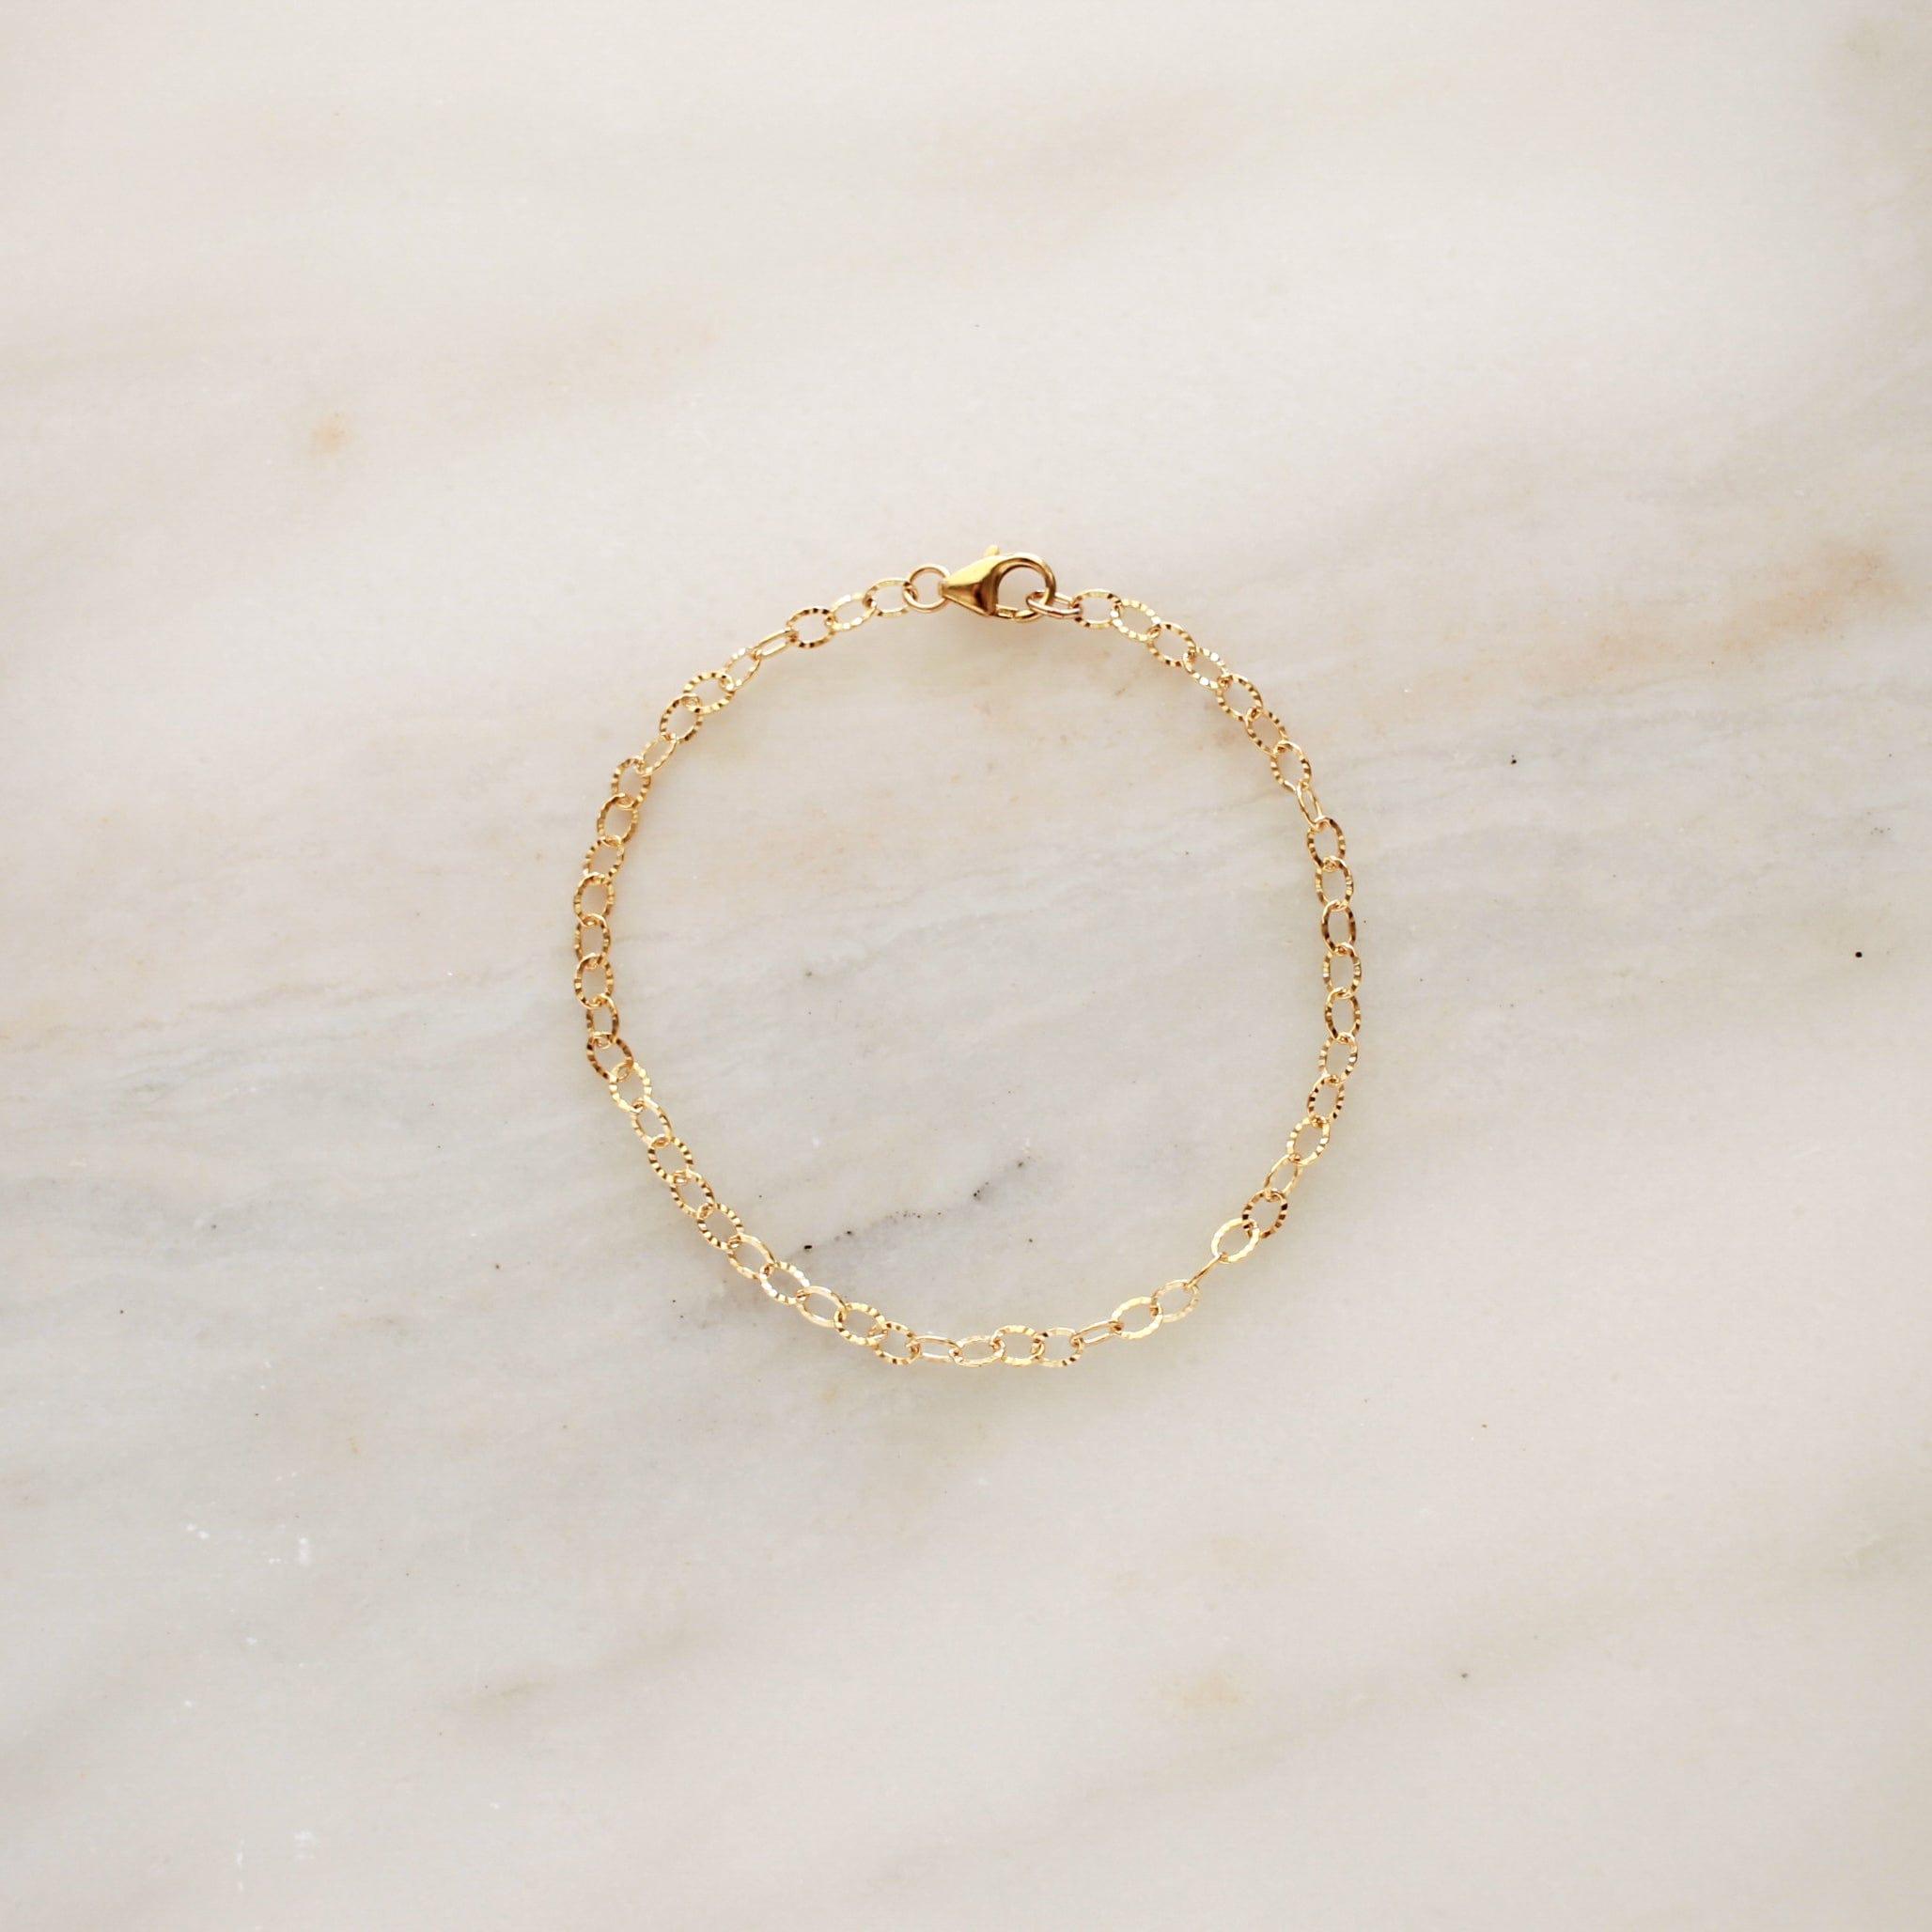 Sunburst Chain Bracelet - Nolia Jewelry - Meaningful + Sustainably Handcrafted Jewelry